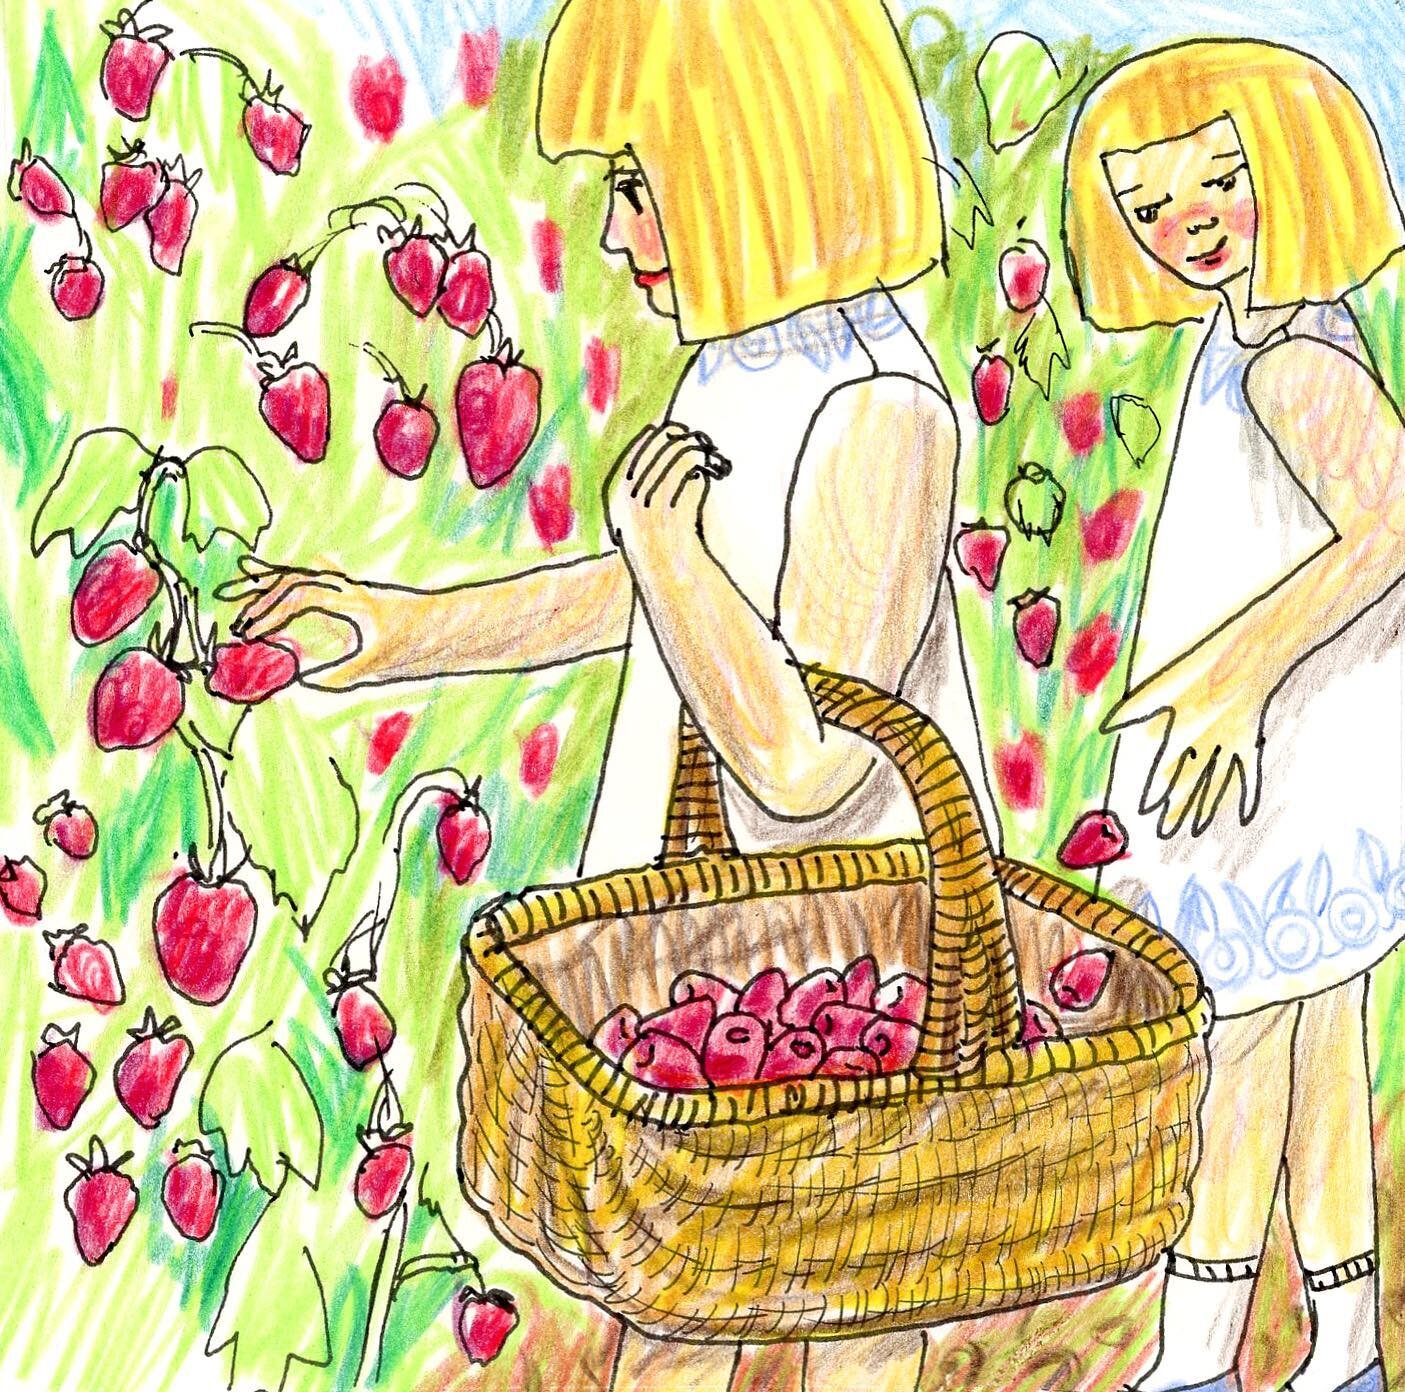 @TheyDrawAndCook Summer draw along: 
Day 26: Basket of berries
.
.
.
.
#theydrawandcook #summerdrawalong #foodillustration #colouredpencils #polychromos #raspberries #growyourown #foodni #belfastart #mumsatworkni #womeninbusinessni #editorialillustra